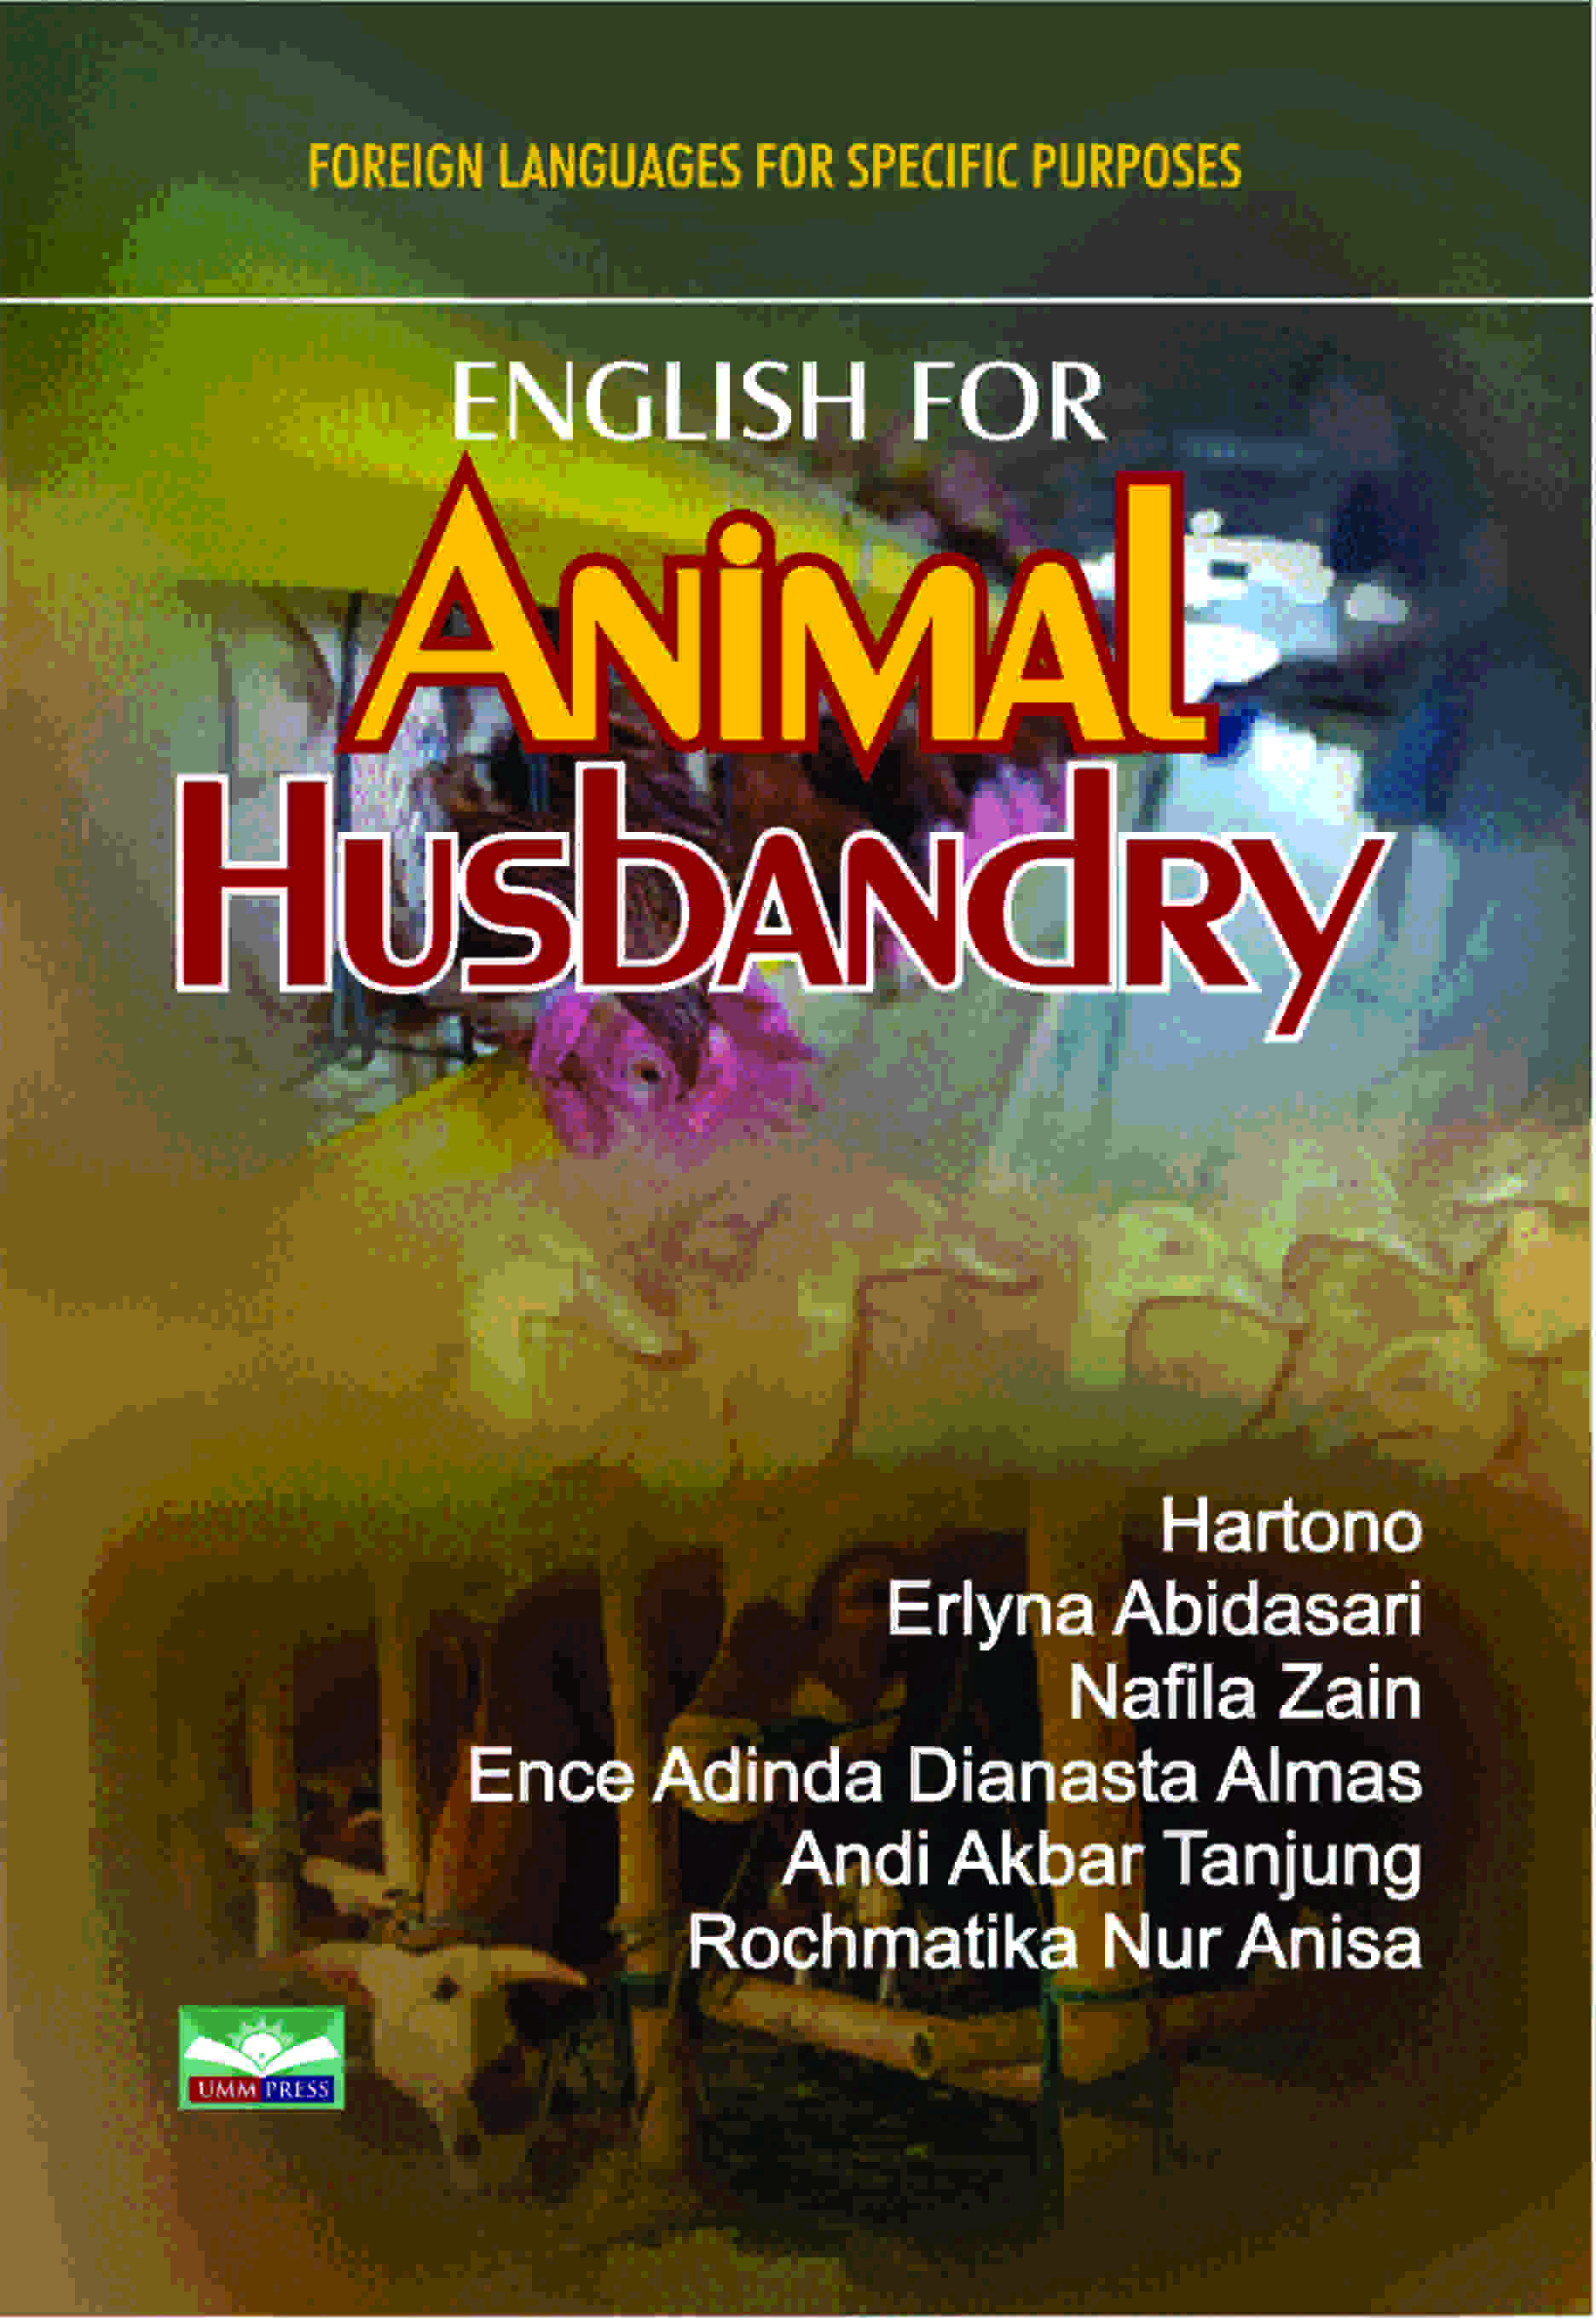 FLSP - ENGLISH FOR ANIMAL HUSBANDRY